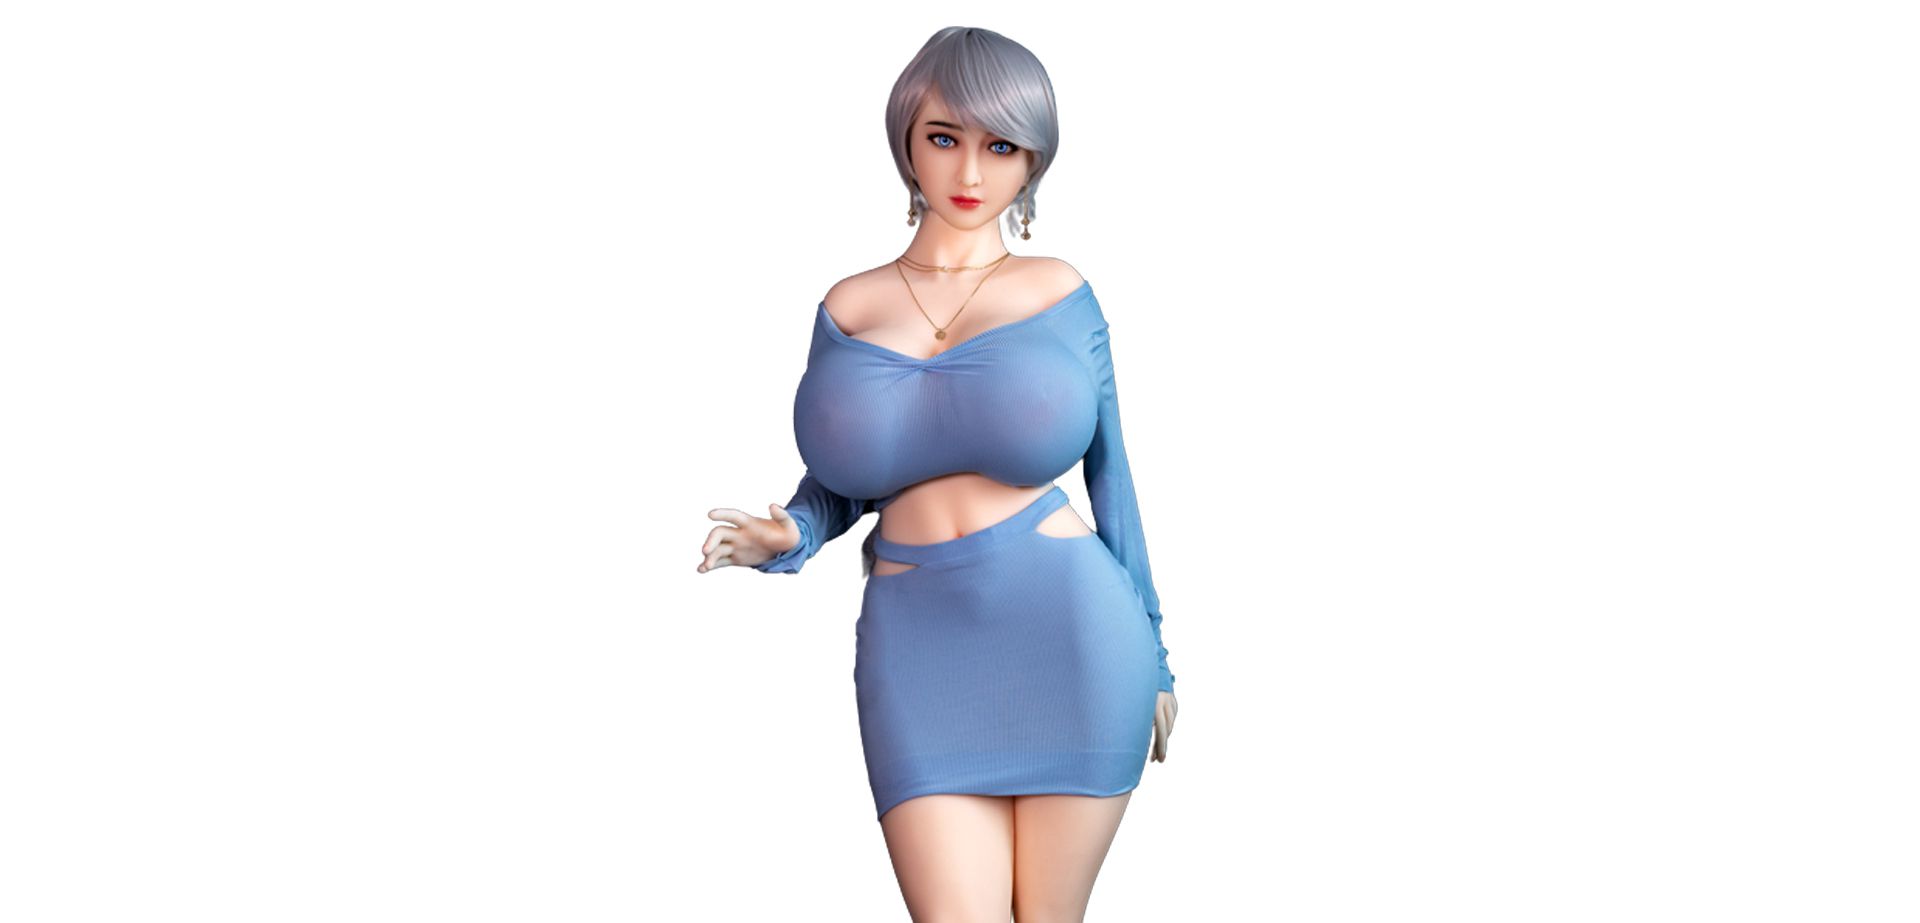 Milf sex doll in a blue dress.